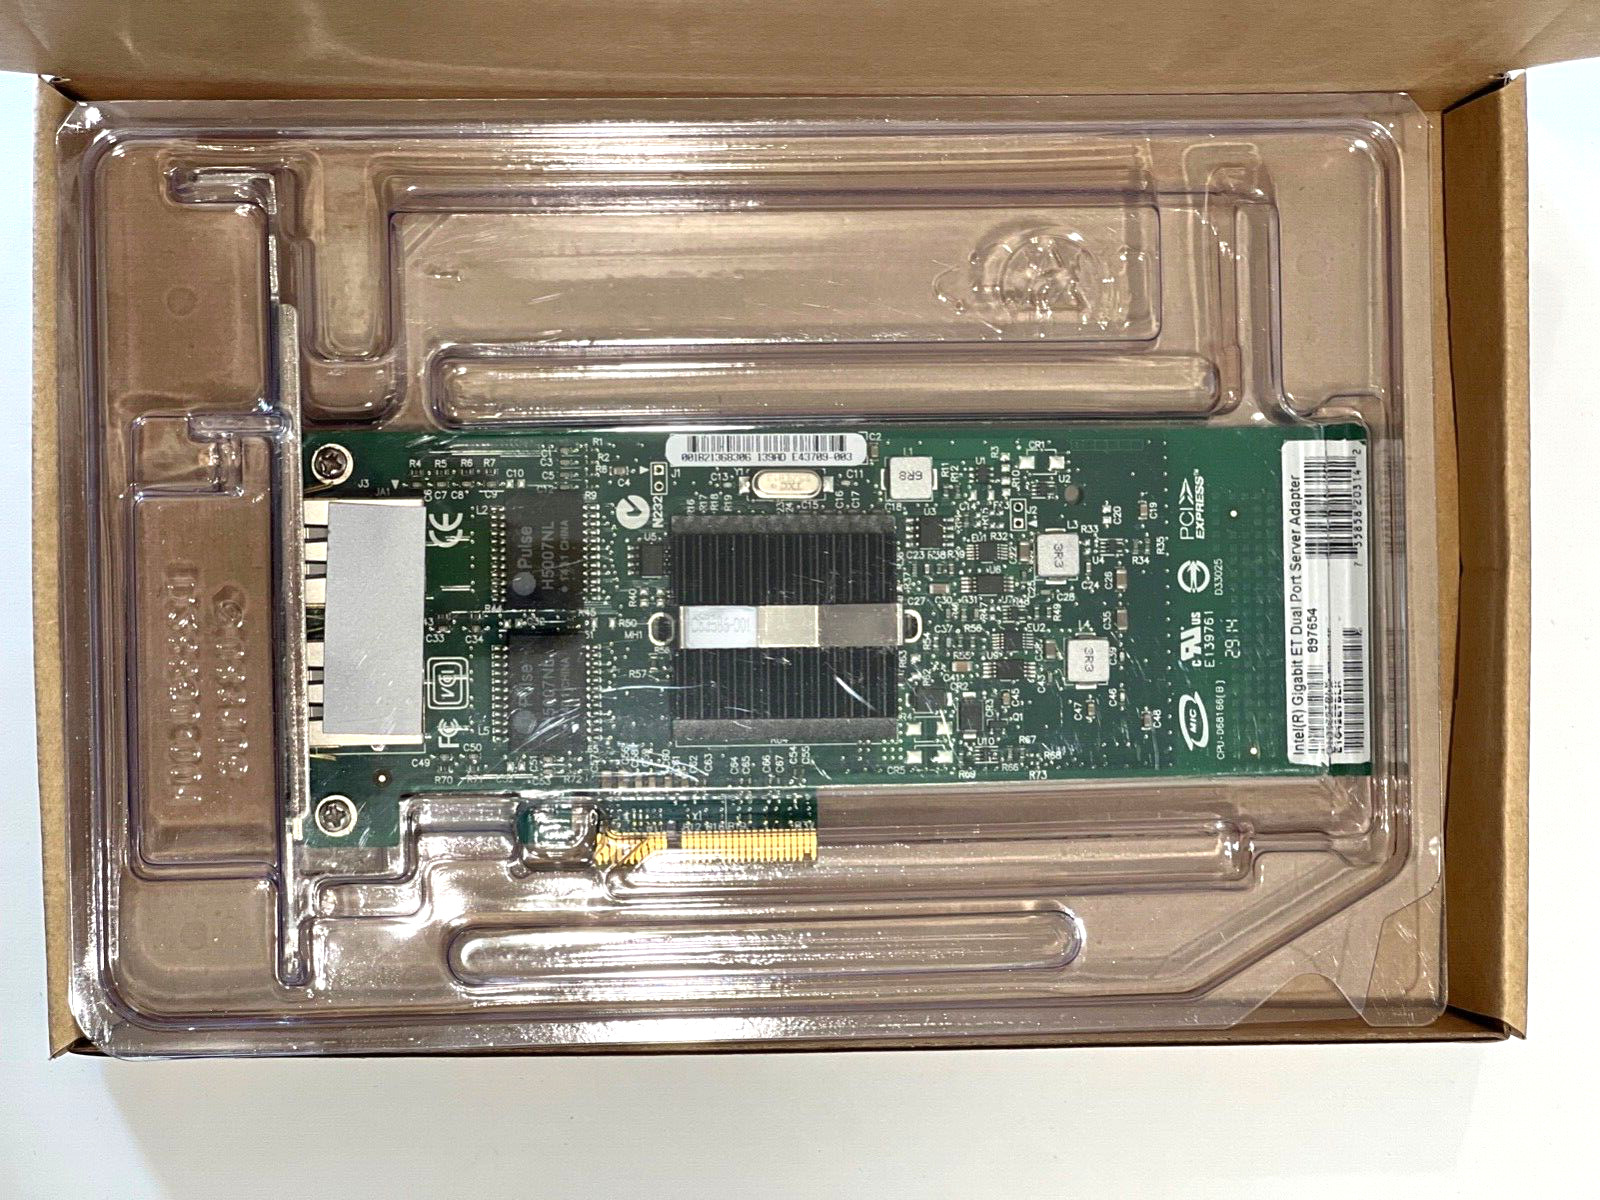 Intel E1G42ETBLK Gigabit ET Dual Port PCI-Express Server Adapter